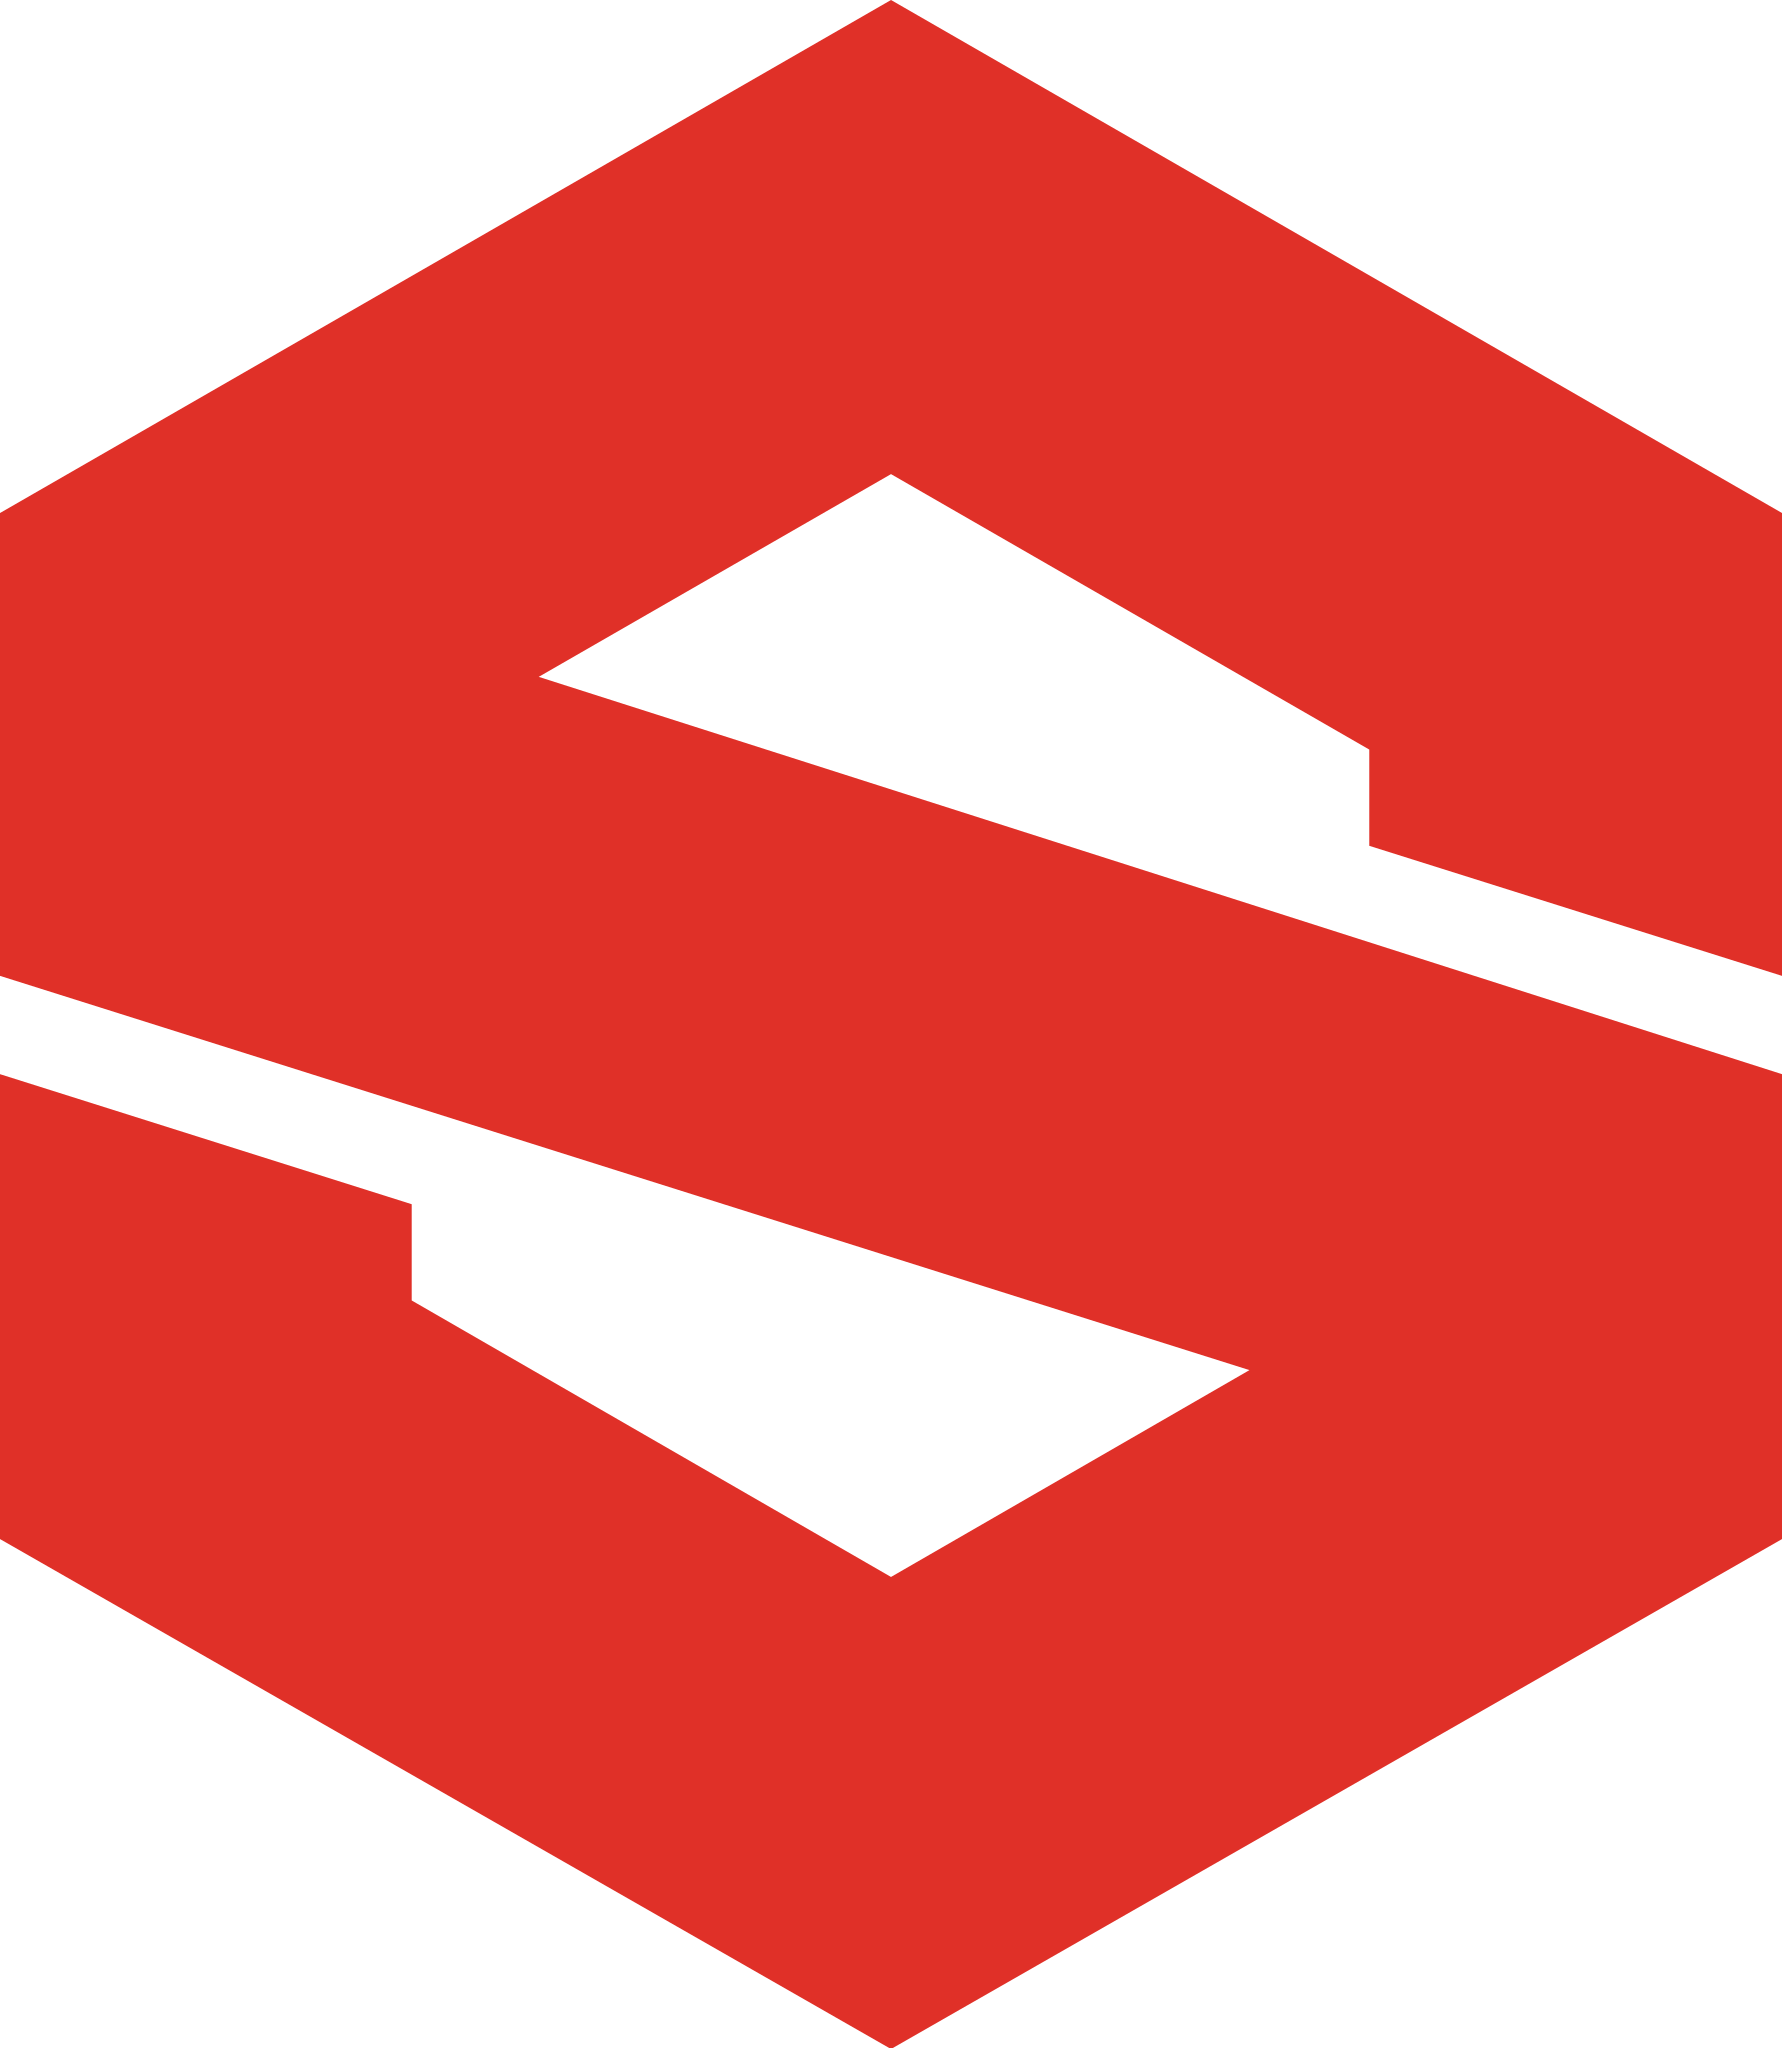 Substance Painter Logo - Adobe Substance 3D icon.svg